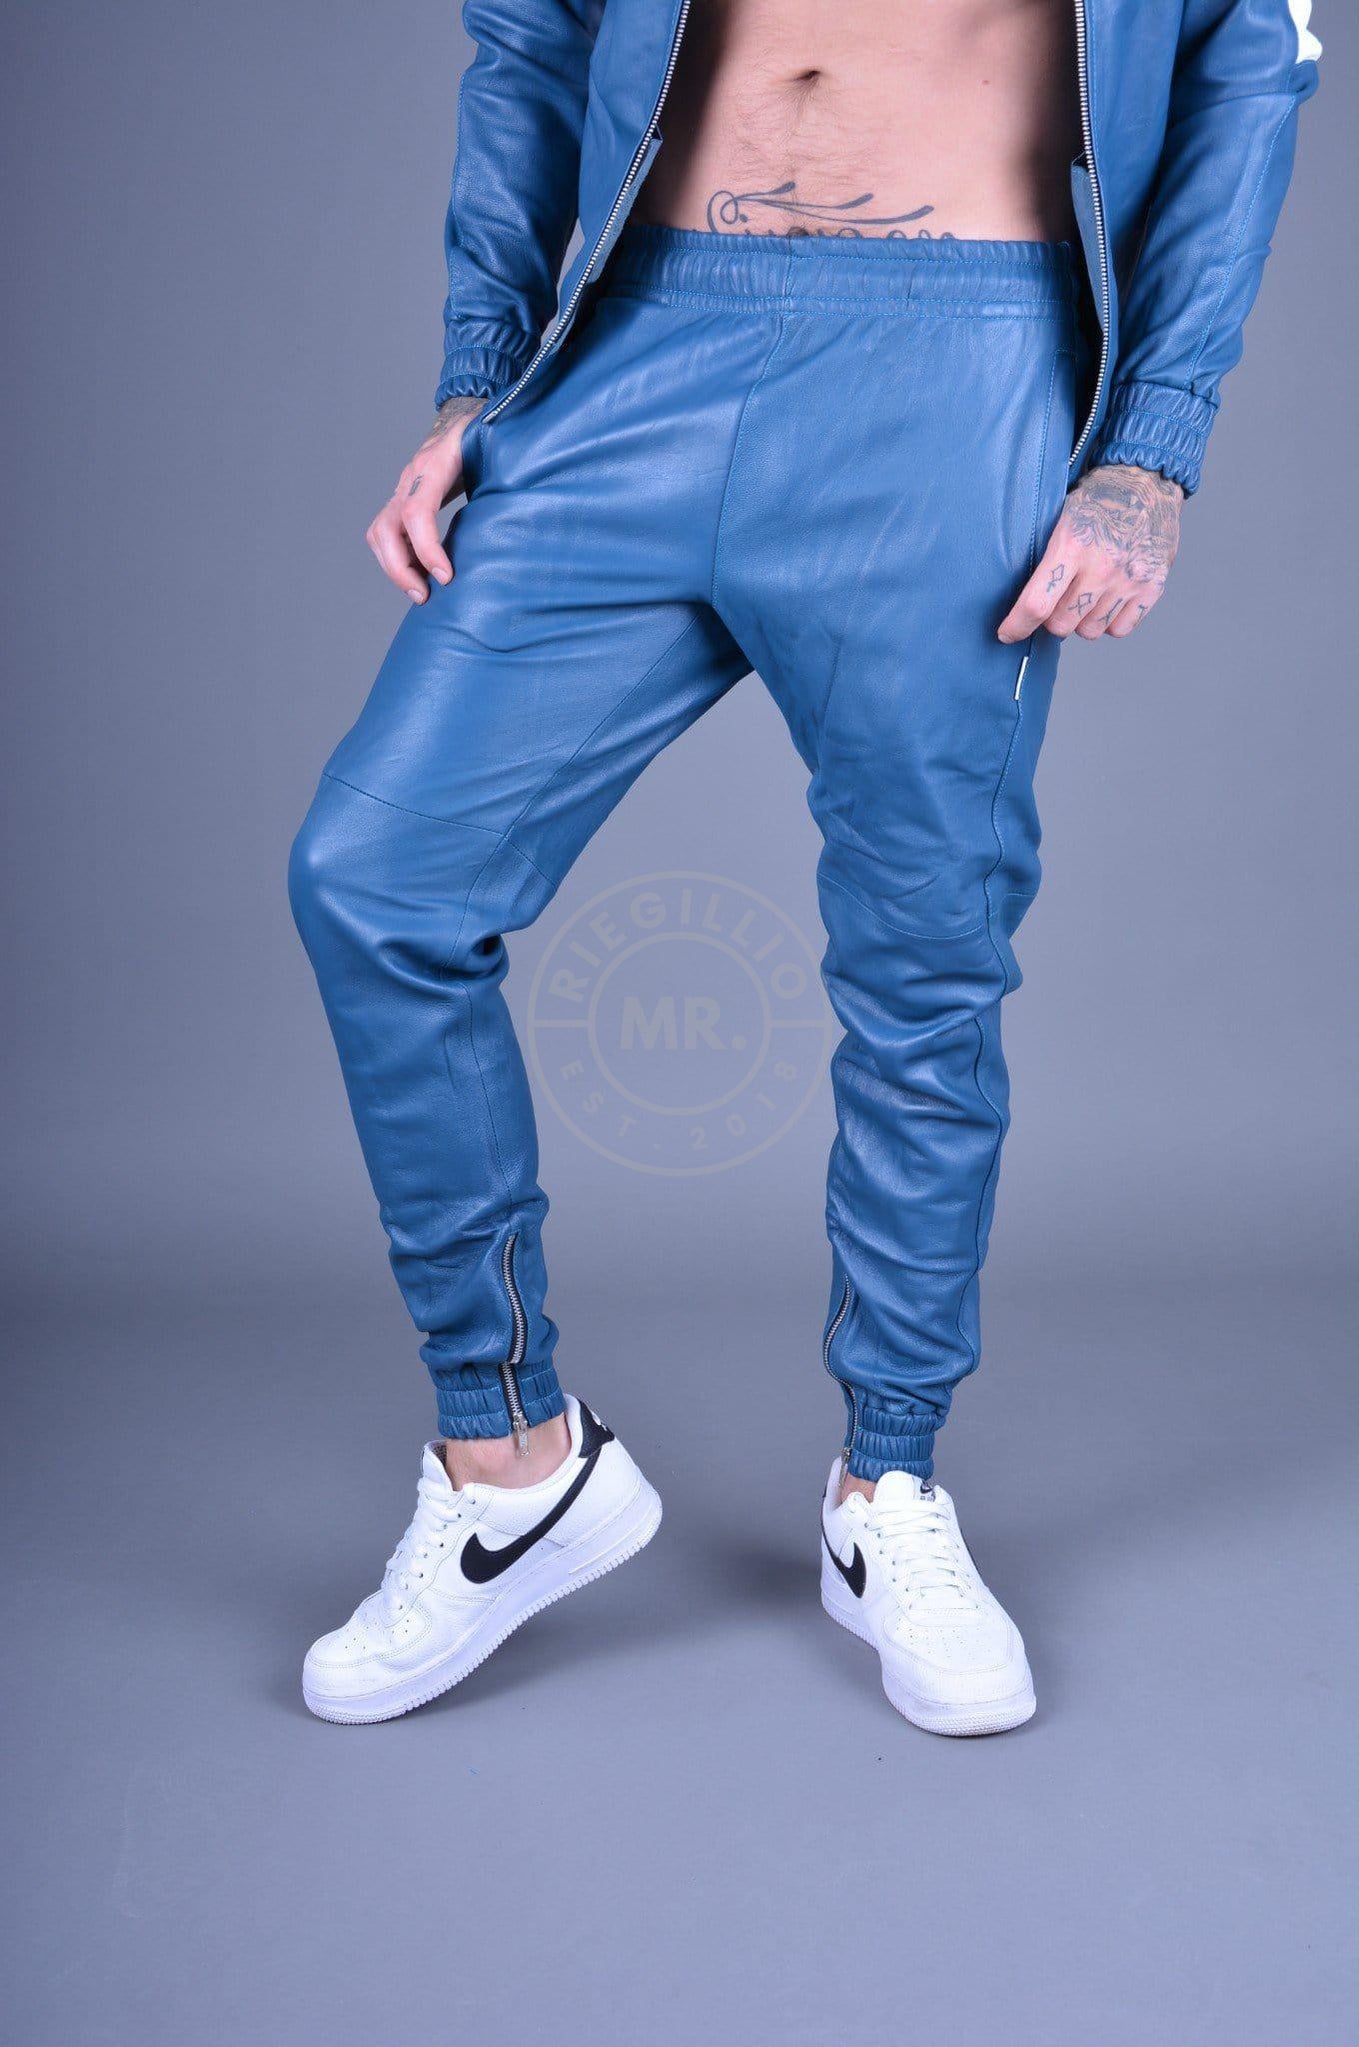 Jeans Blue Leather Tracksuit Pants at MR. Riegillio